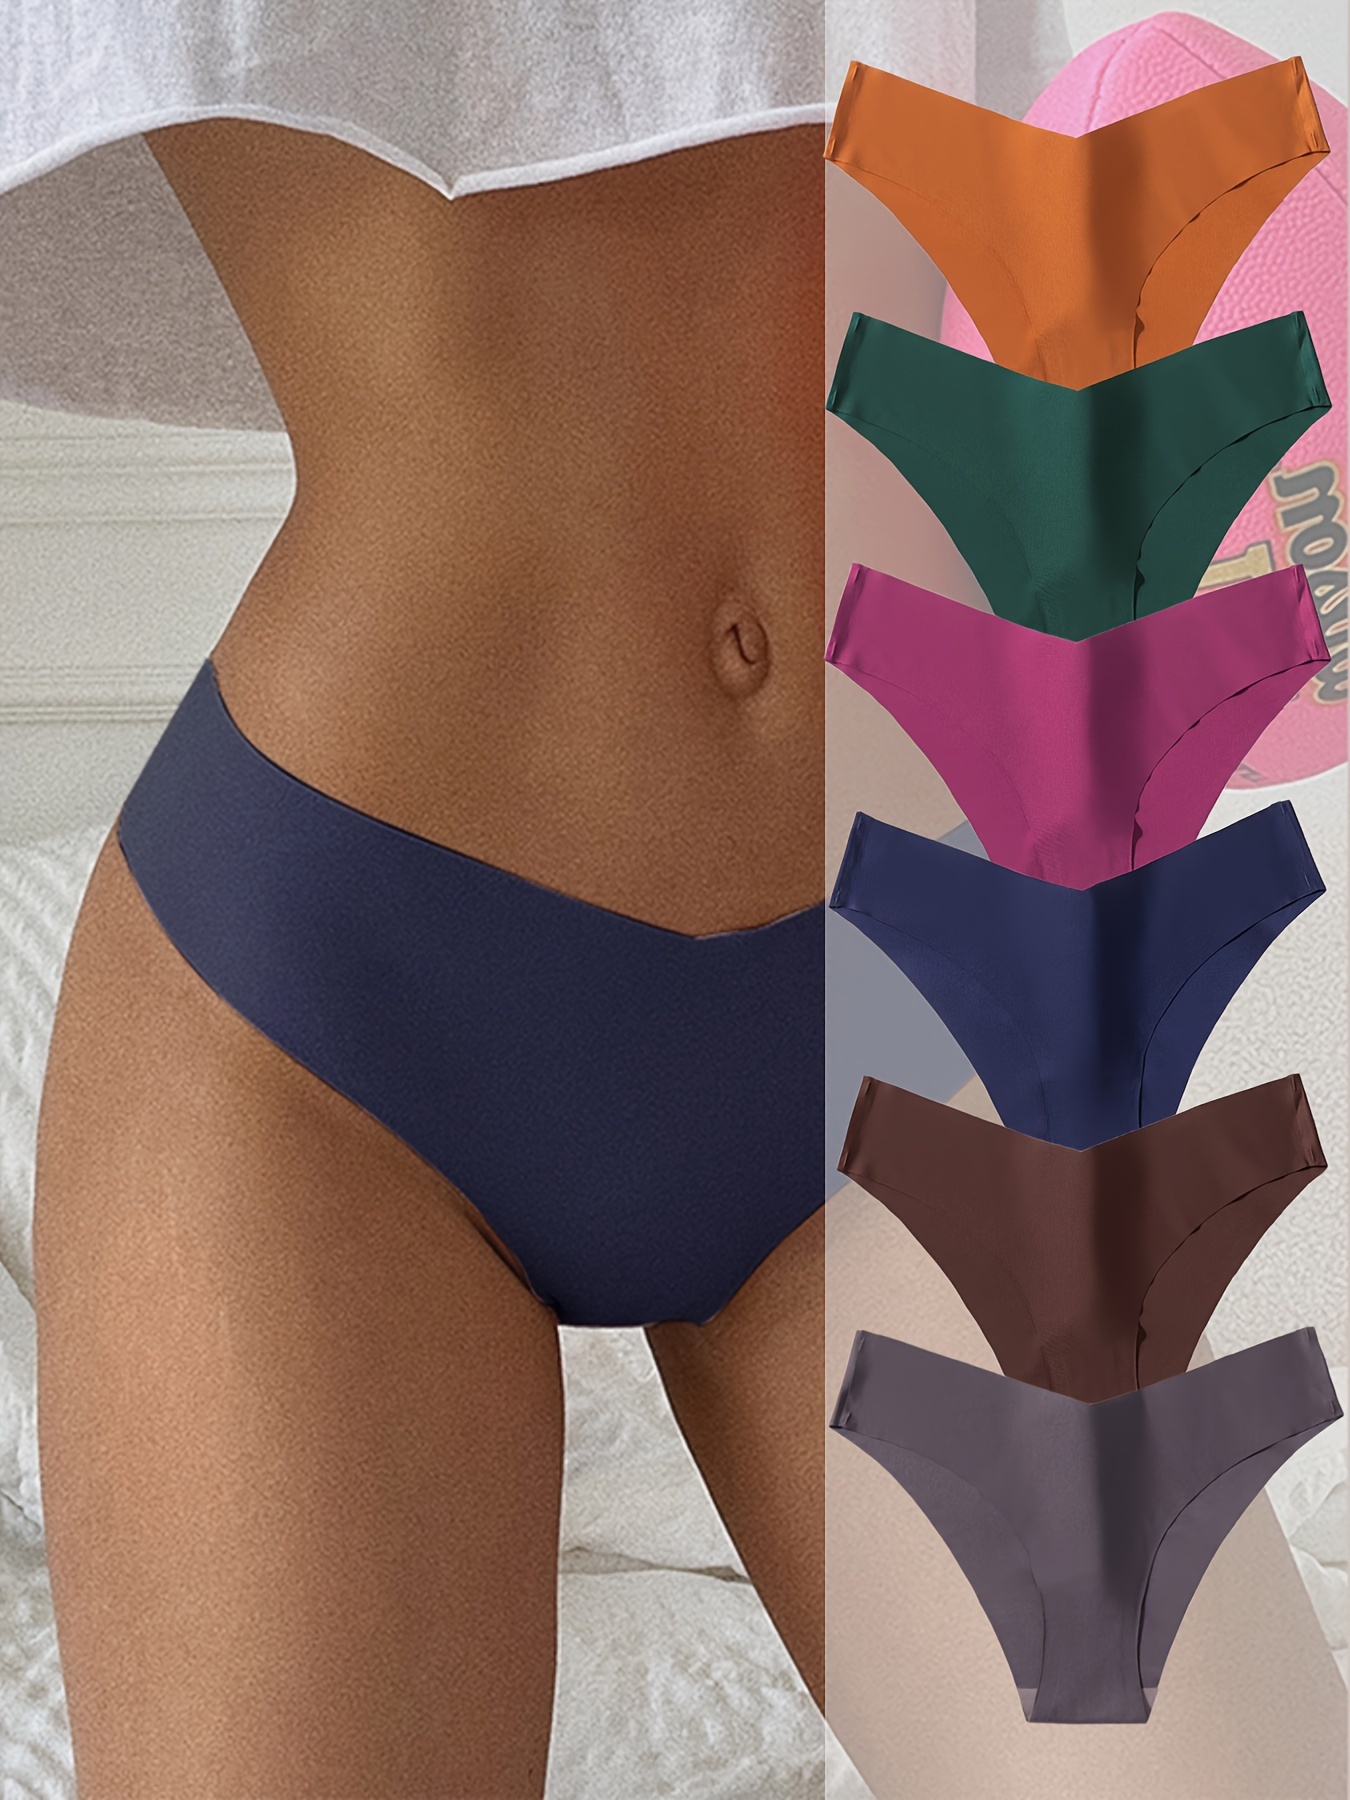 RHYFF Womens Underwear Cotton Lace Panties Soft Bikini Panty